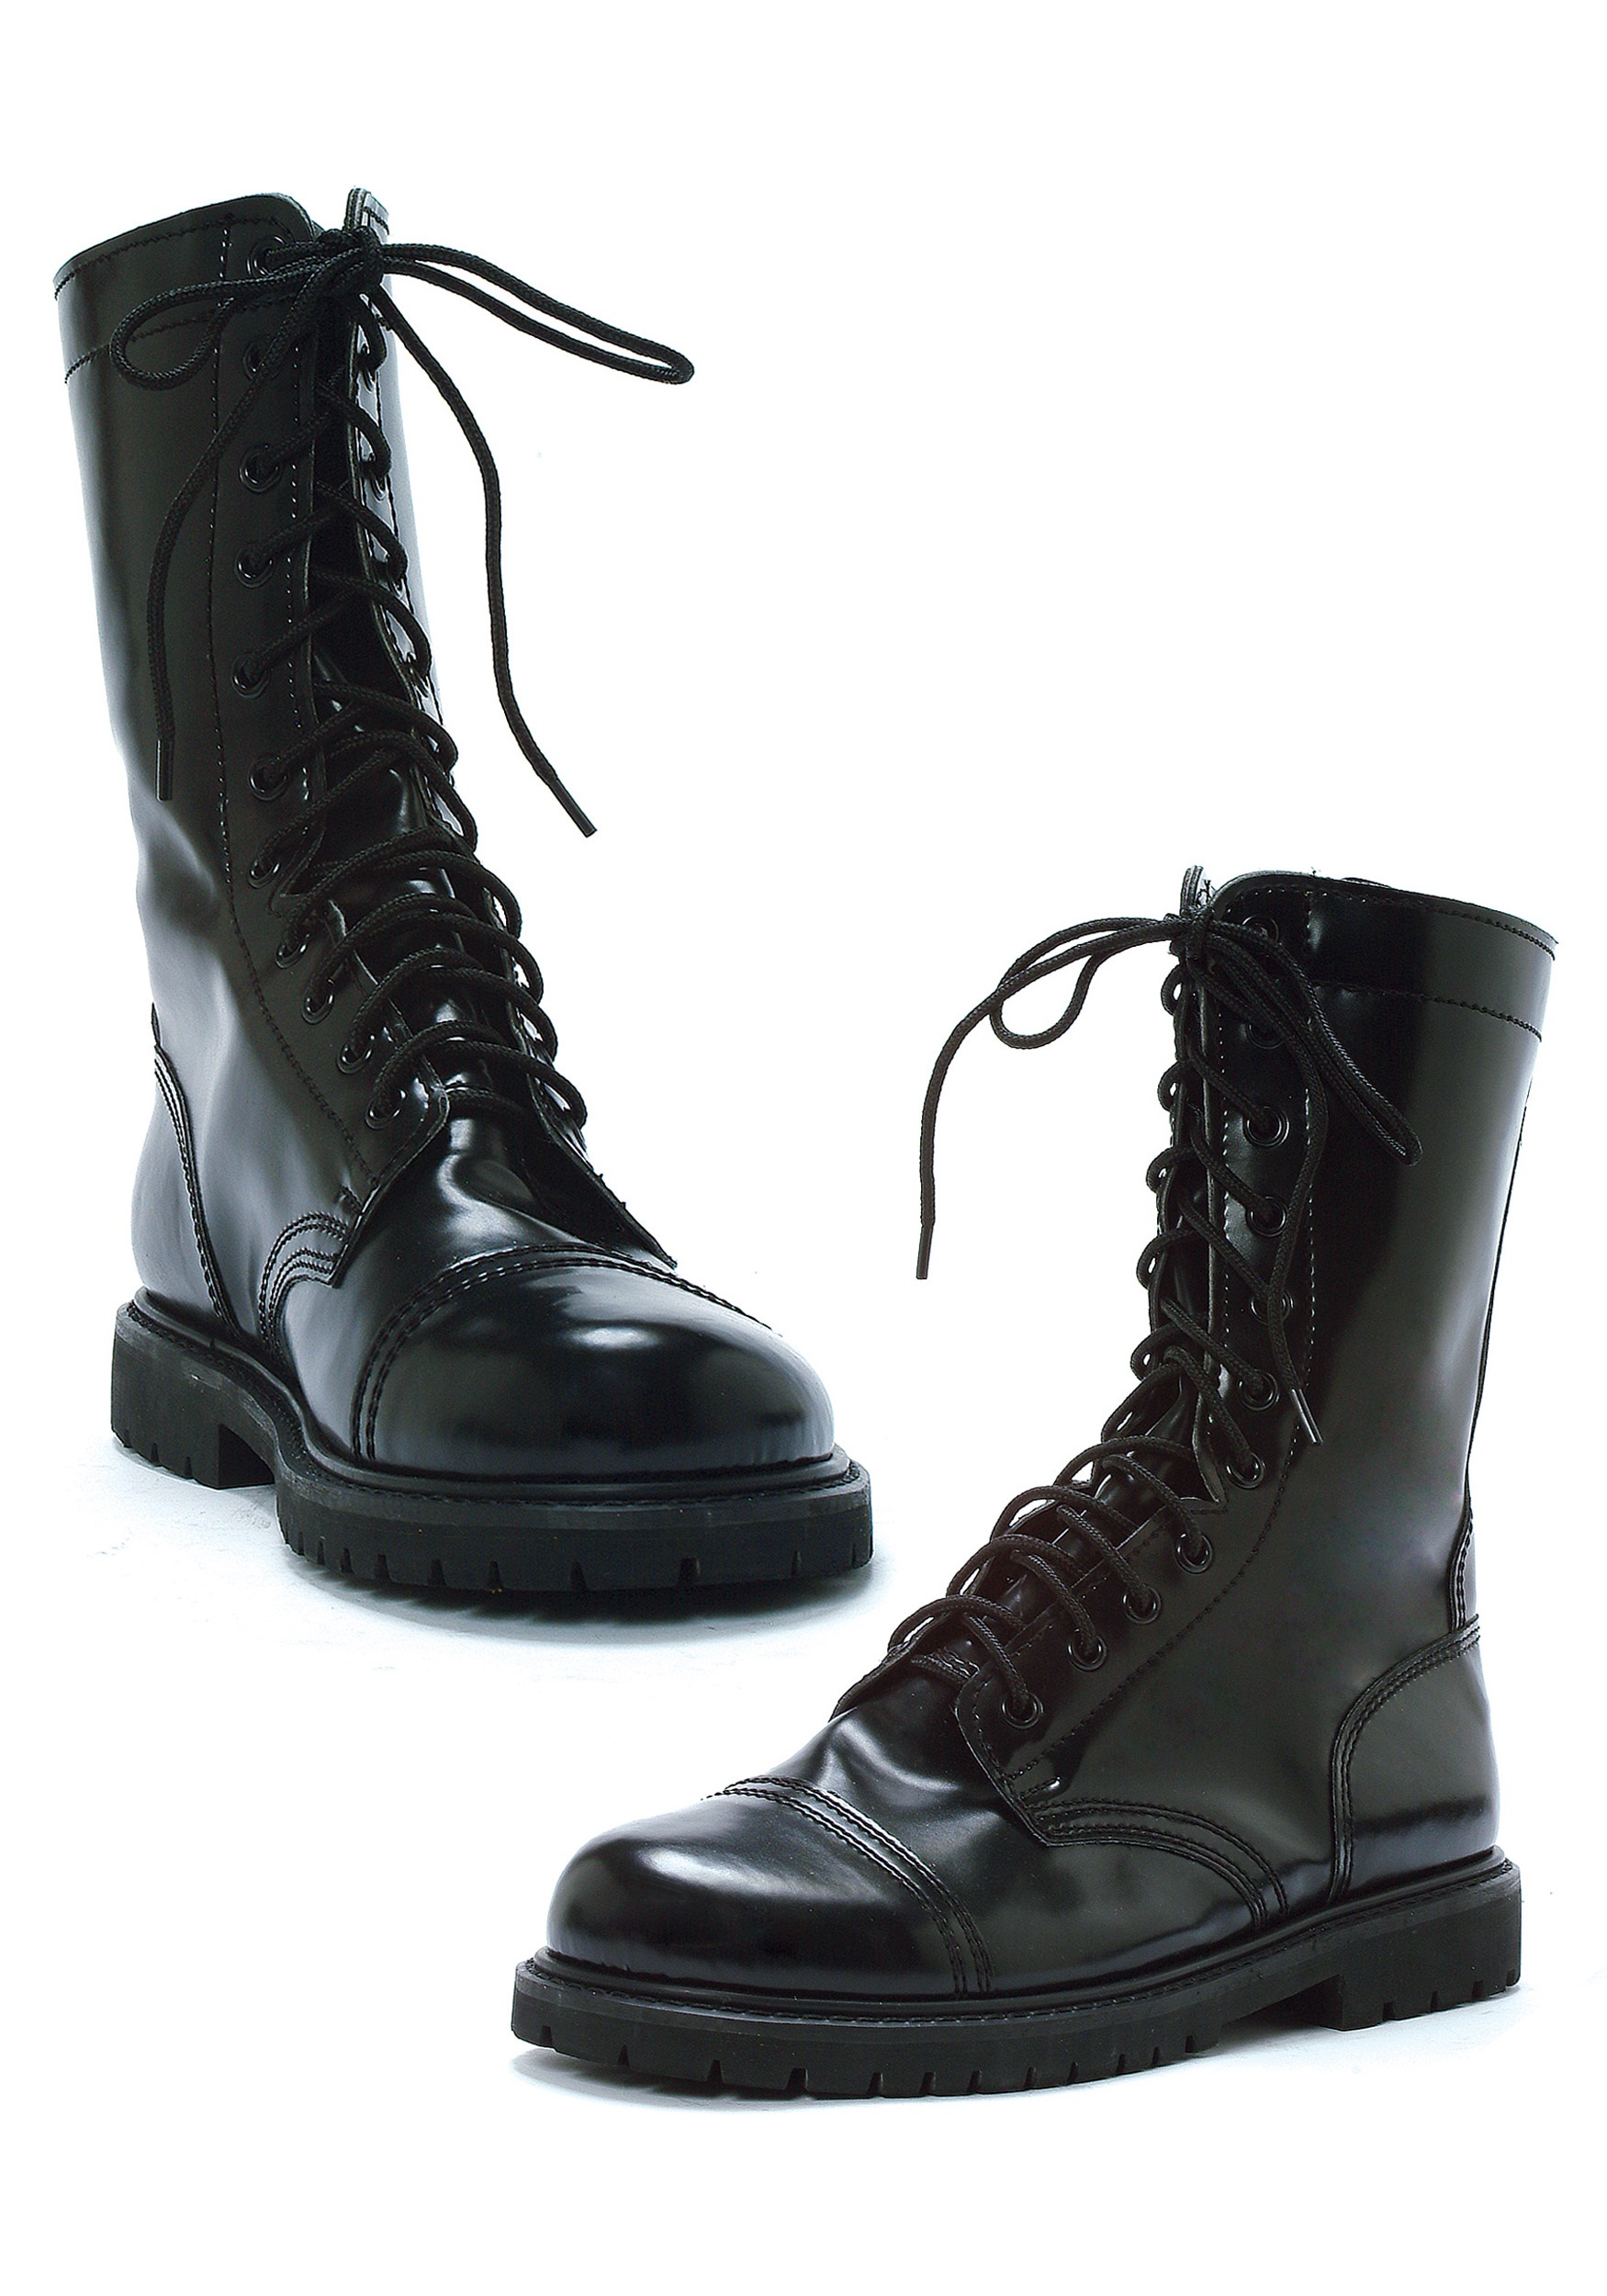 Men's Black Costume Combat Boots